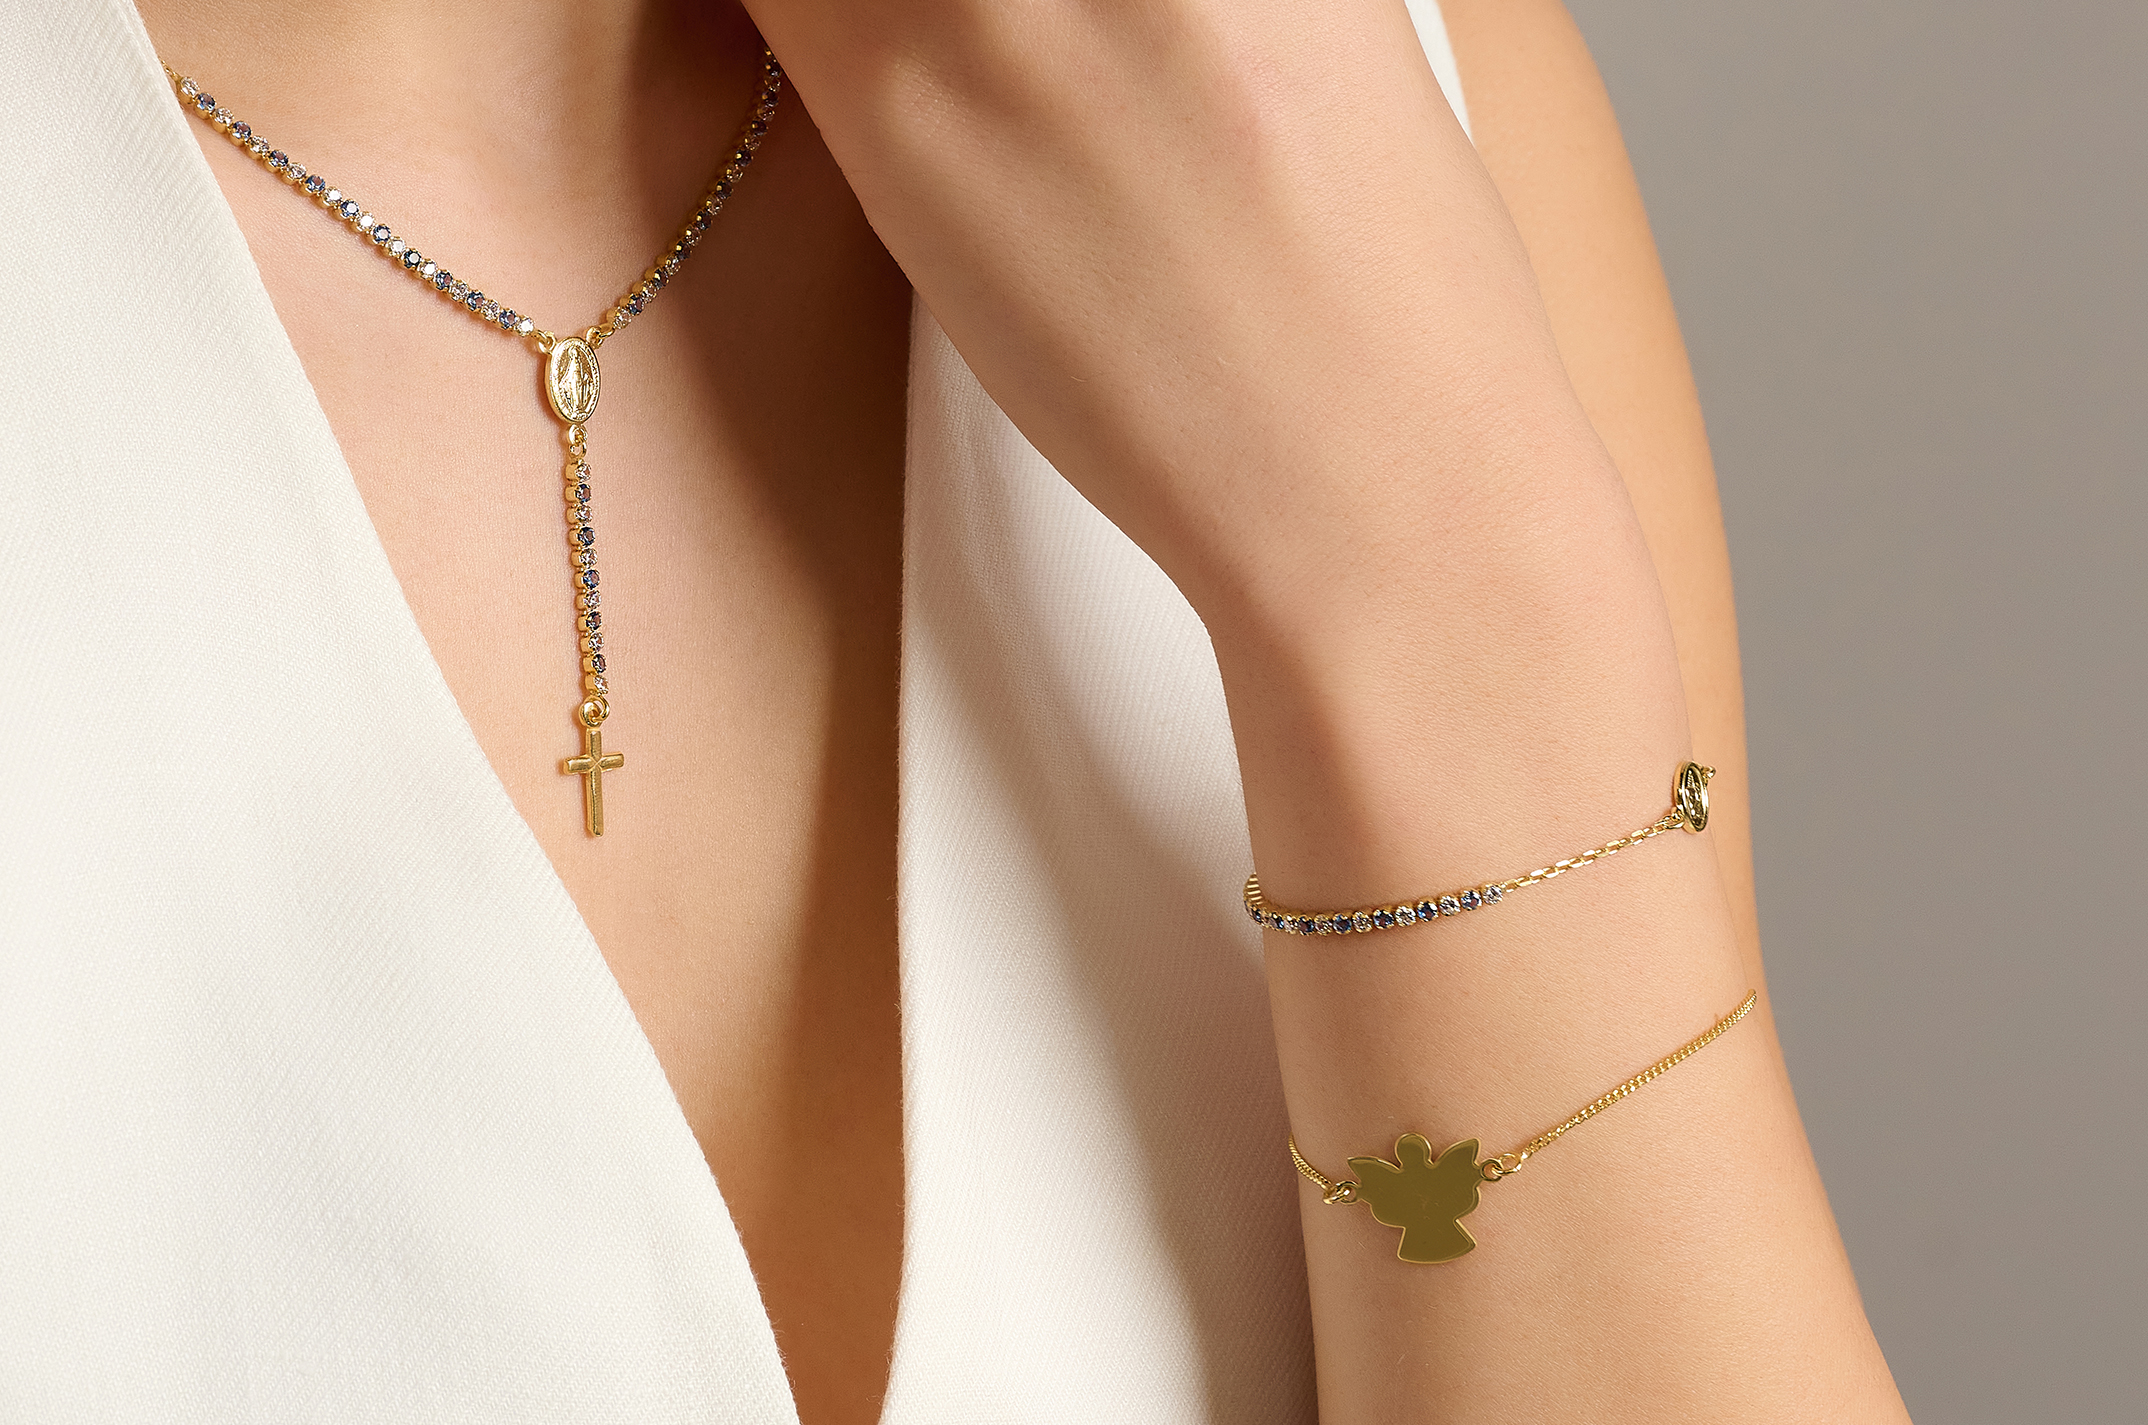 Jewel: bracelet;Material: silver 925;Weight: 2.9 gr;Color: white;Size: 17 cm + 3 cm